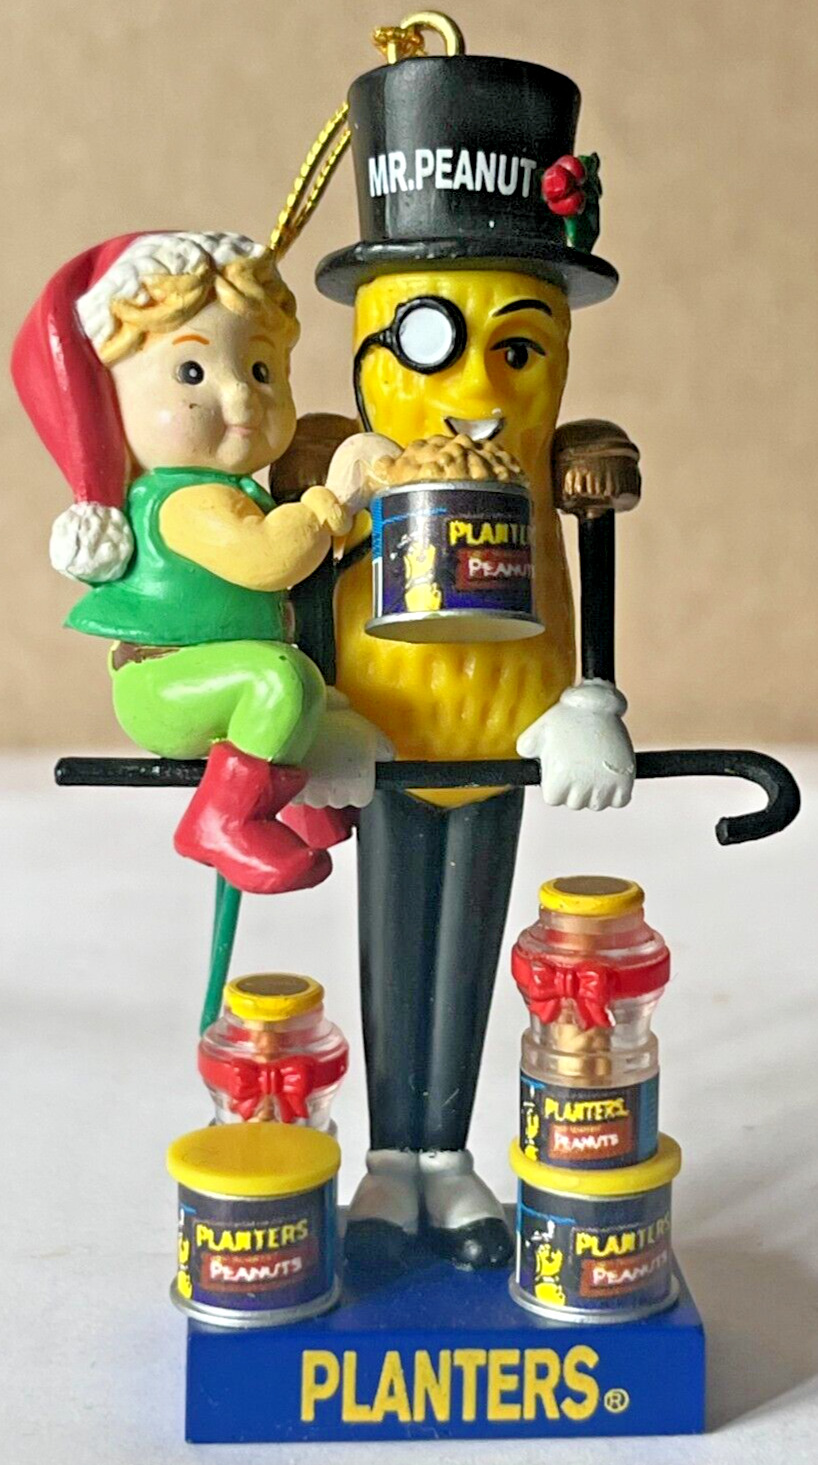 1996 Enesco Mr. Peanut Nutcracker Ornament 